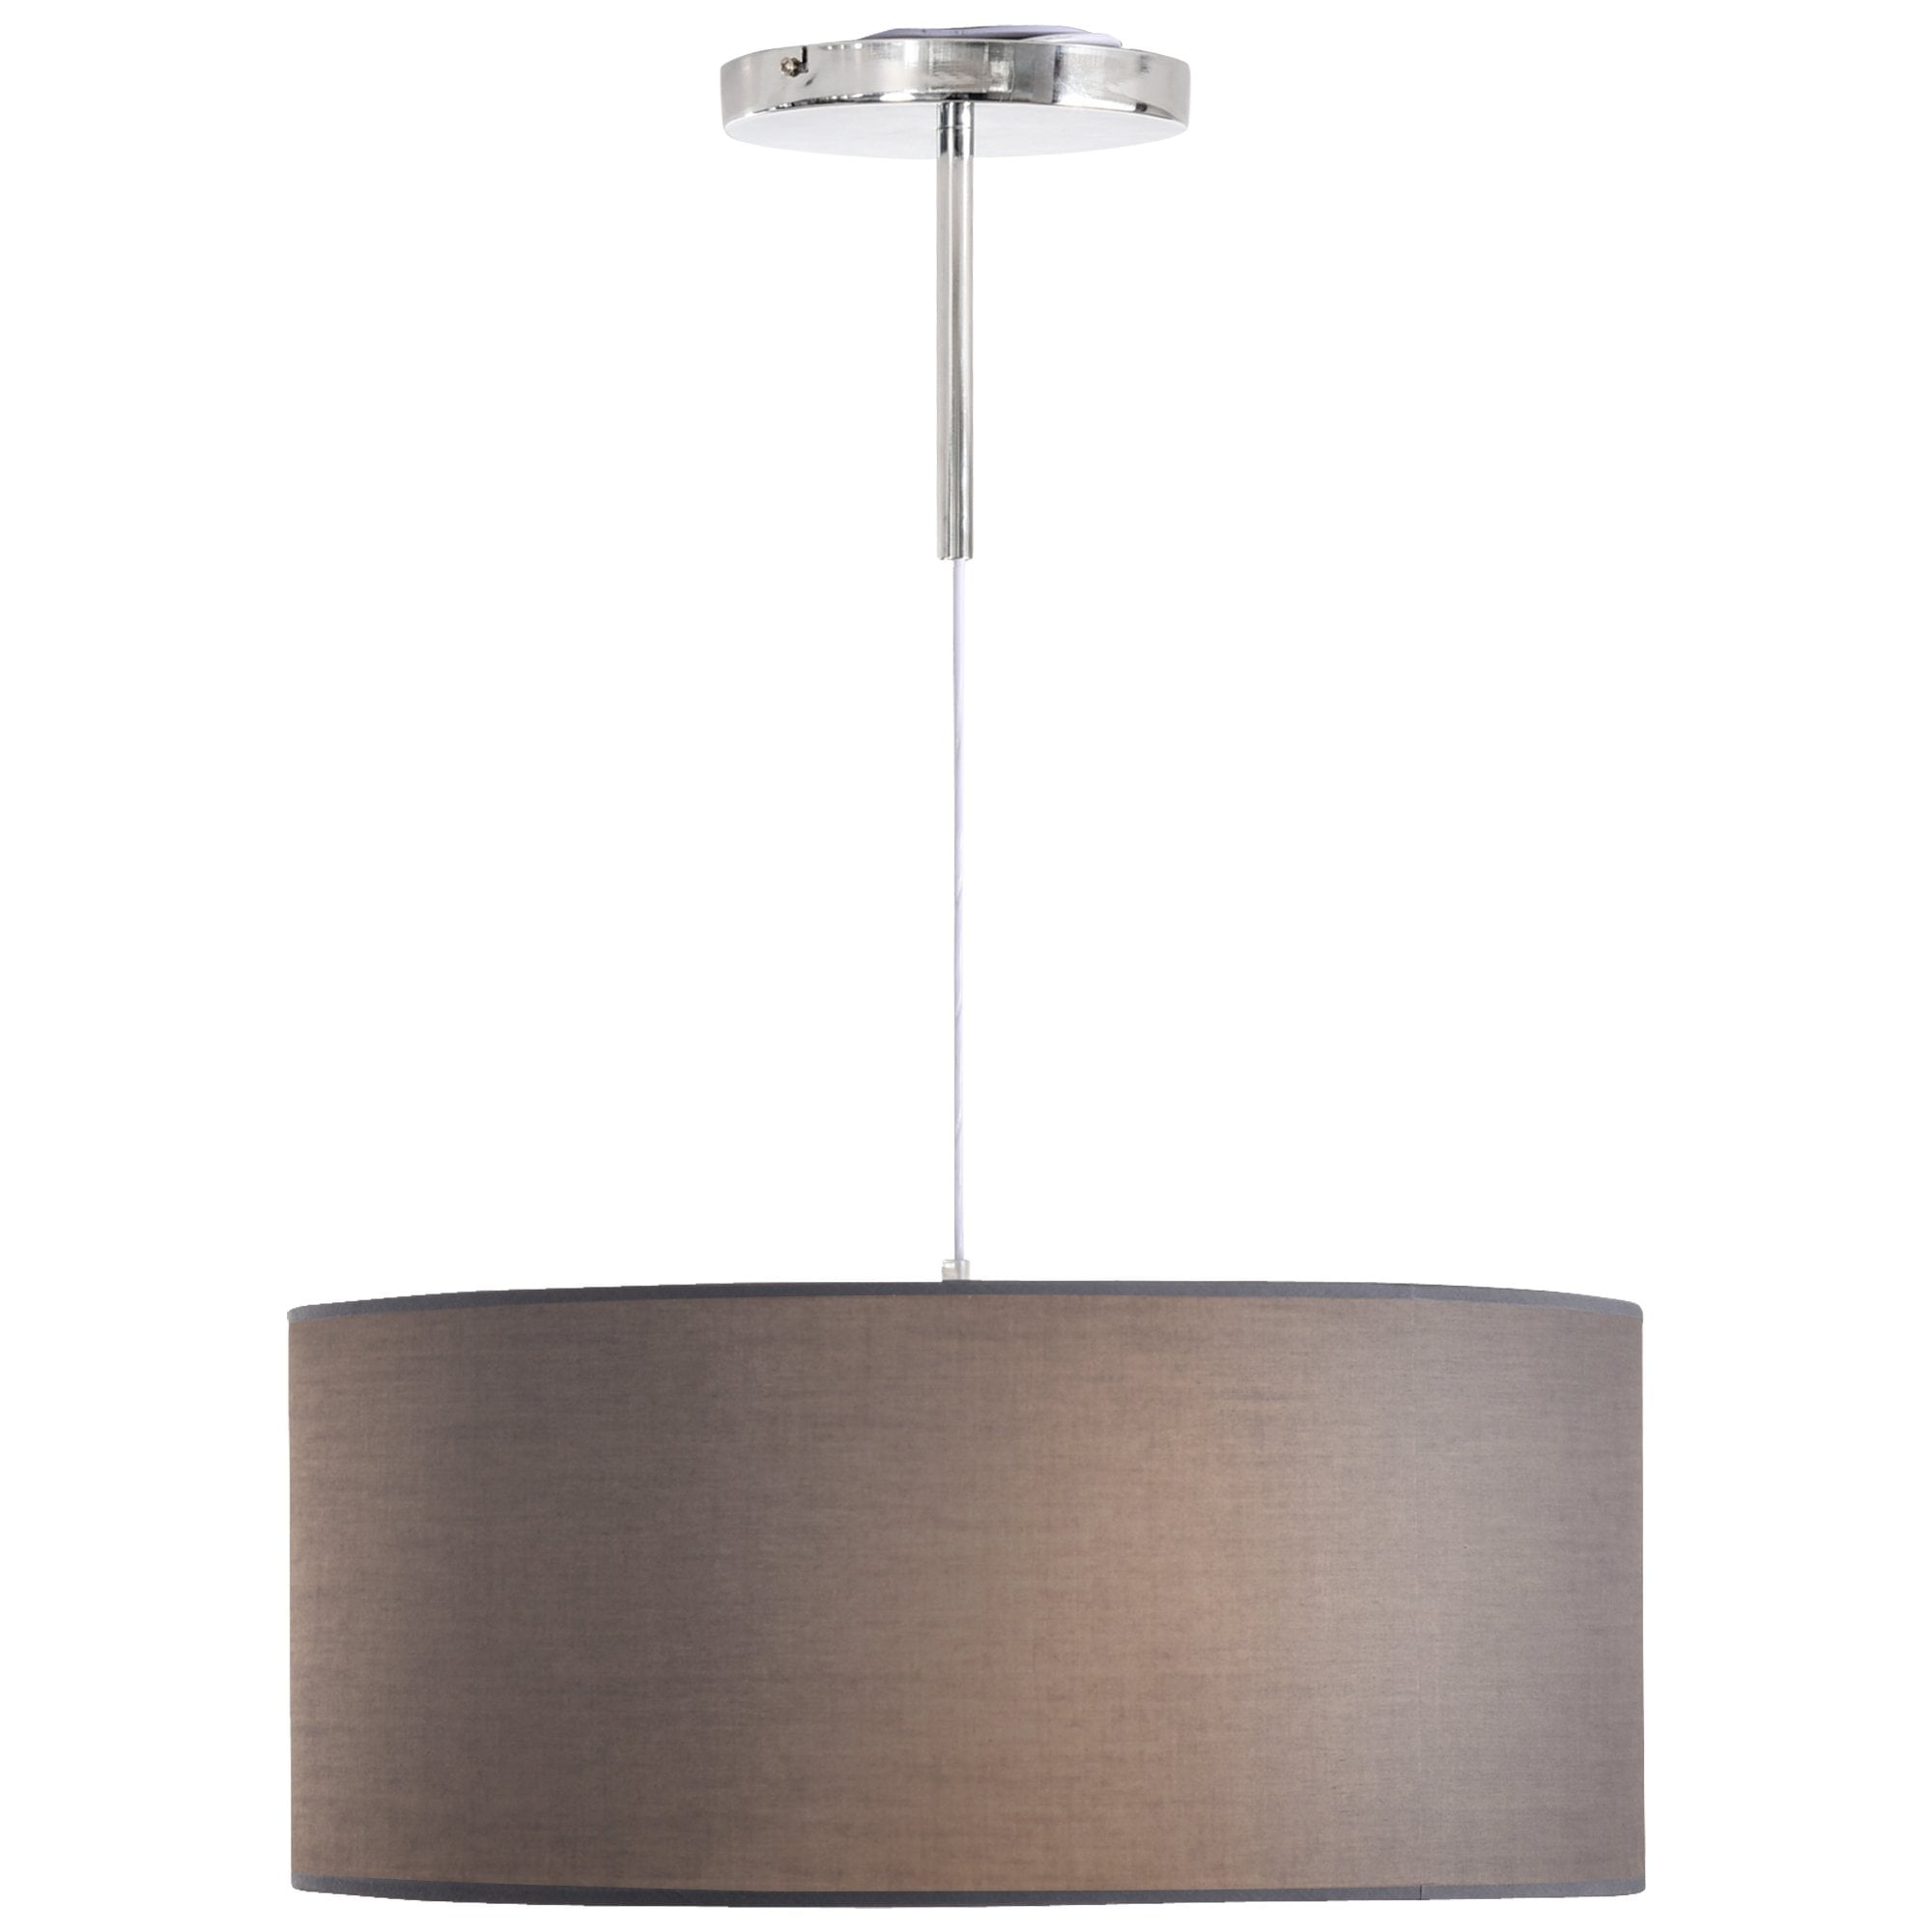 HOMCOM Modern LED Pendant Light Chandelier with Three Lighting Modes Metal Round Base for Living Room - Bedroom - Office - Entrance - Grey - 59 x 59 x